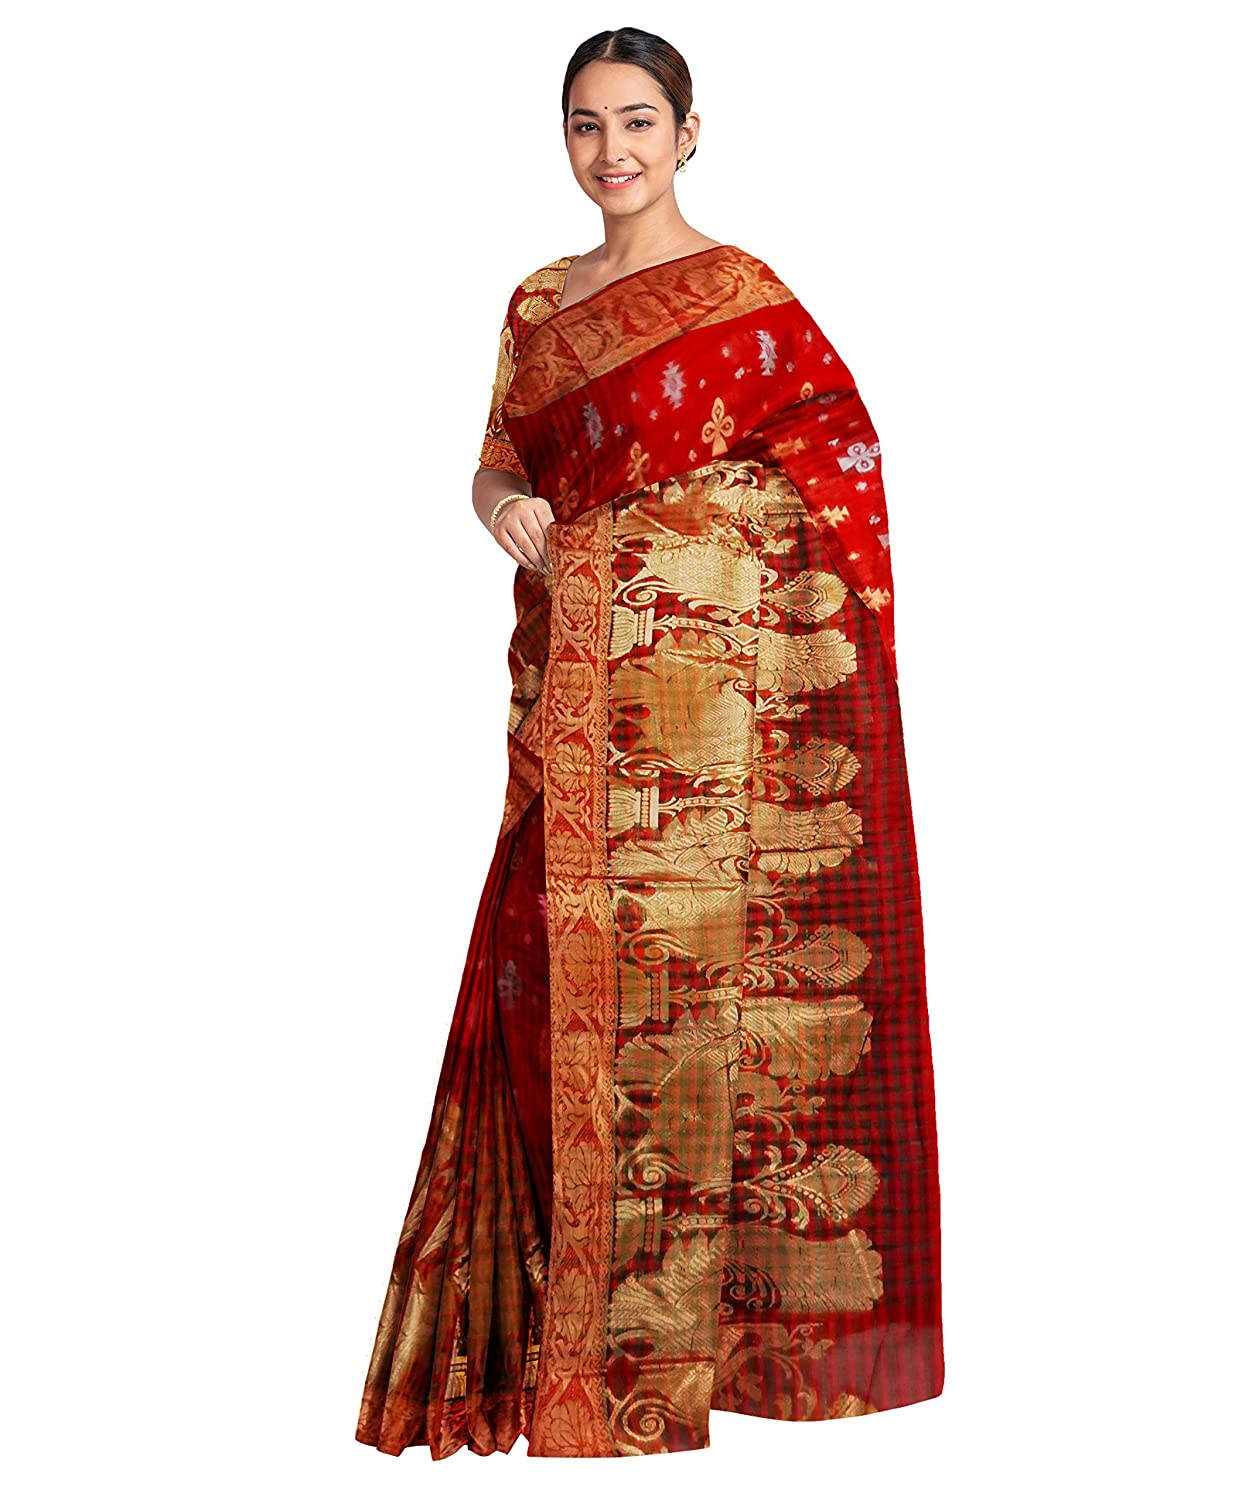 Pradip Fabrics Ethnic Women's and Girl's Red and Golden color Baluchari saree